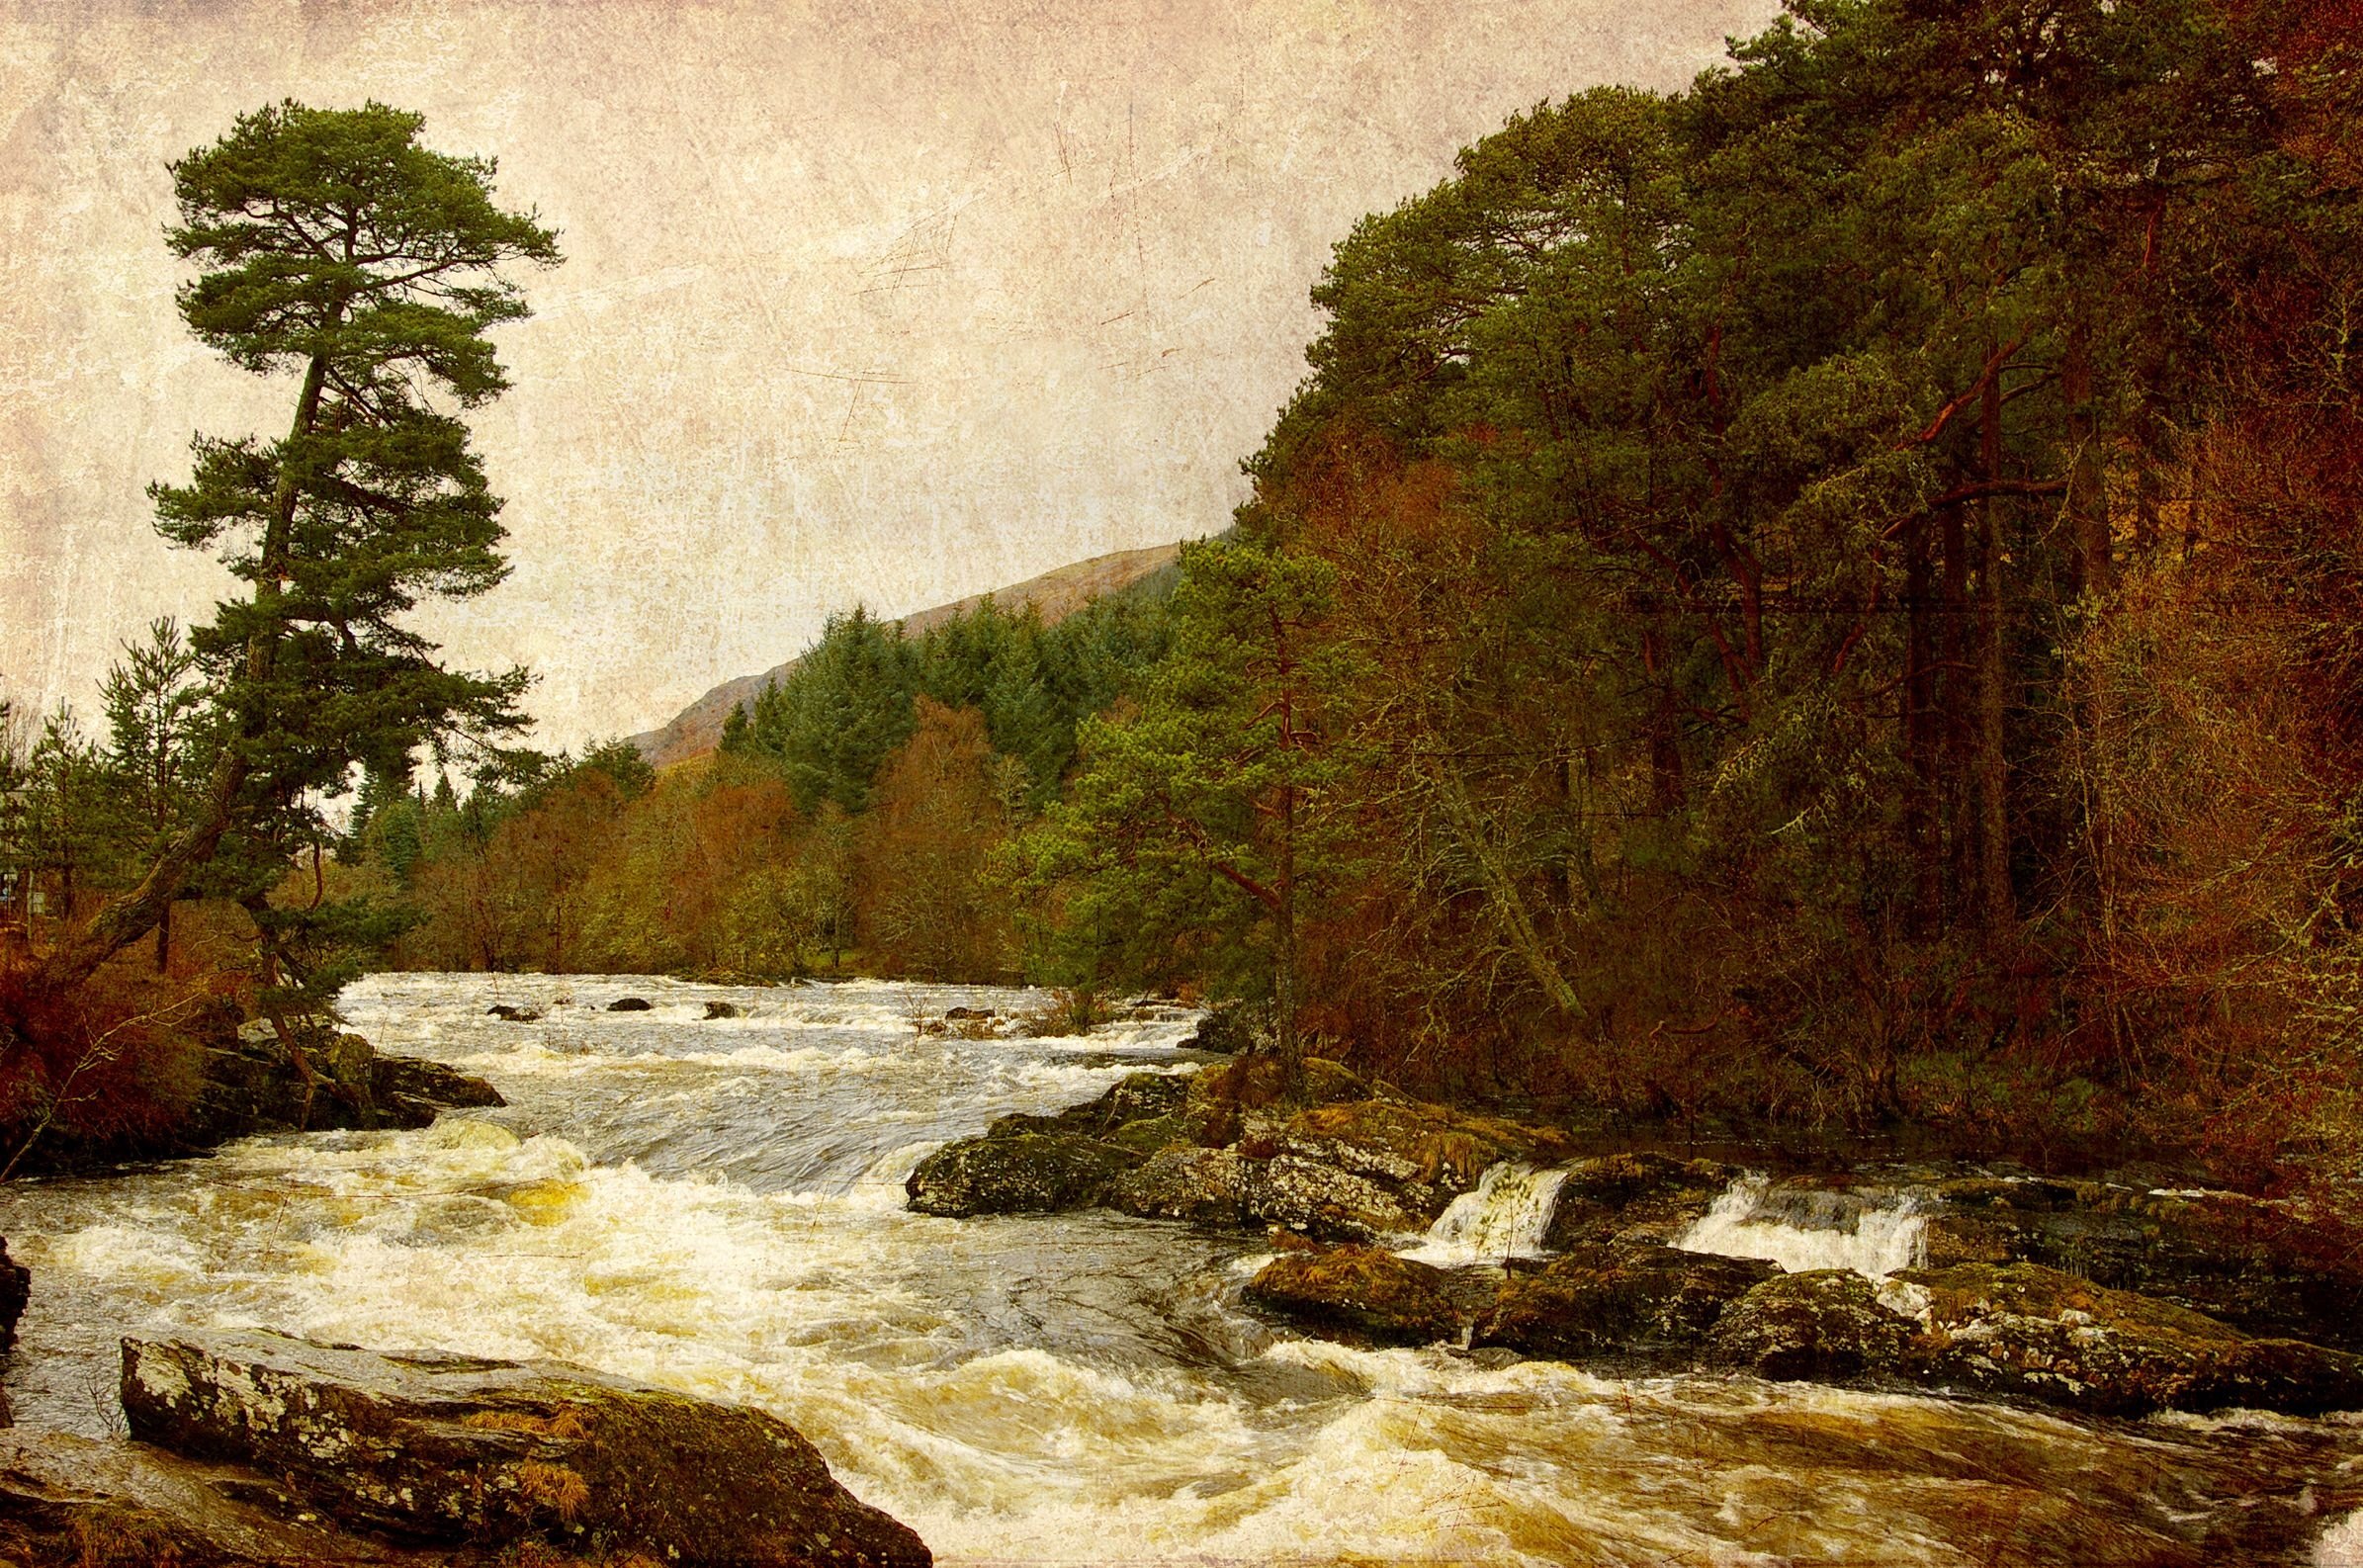 killin, Scotland, Art, Landscape, Autumn, River Wallpaper